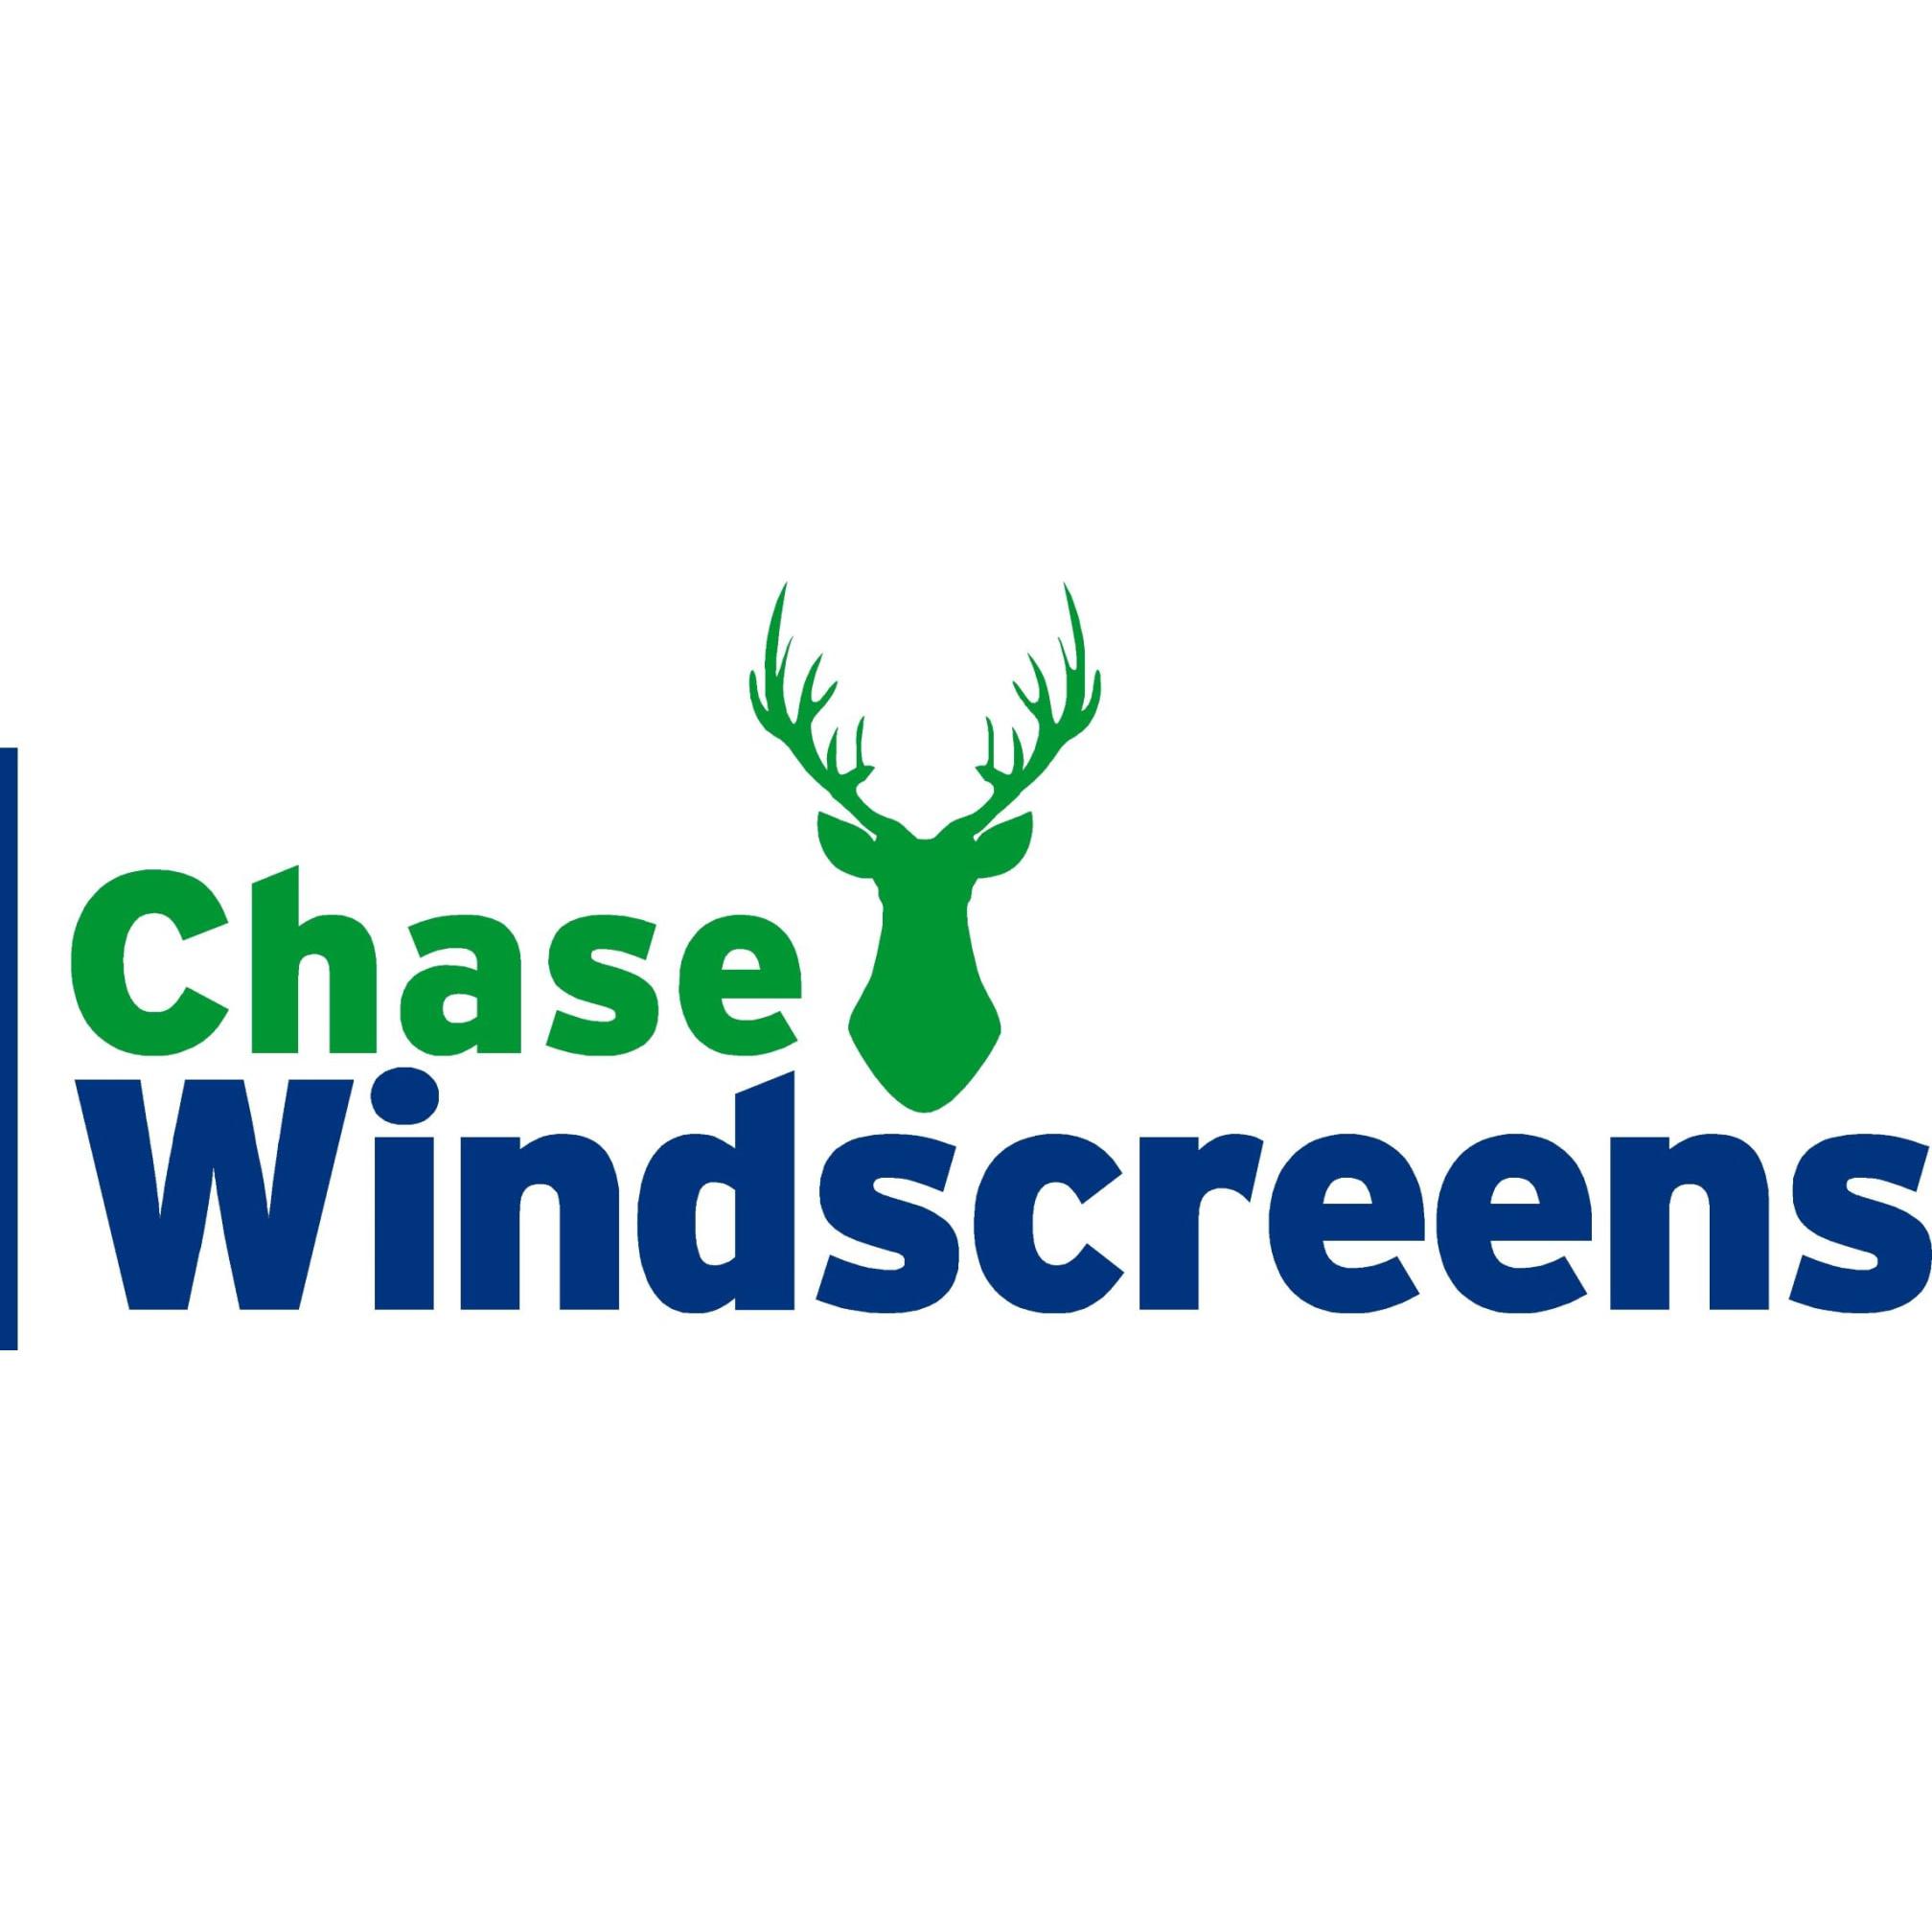 Chase Windscreens Ltd - Cannock, Staffordshire WS11 7GB - 07860 678800 | ShowMeLocal.com